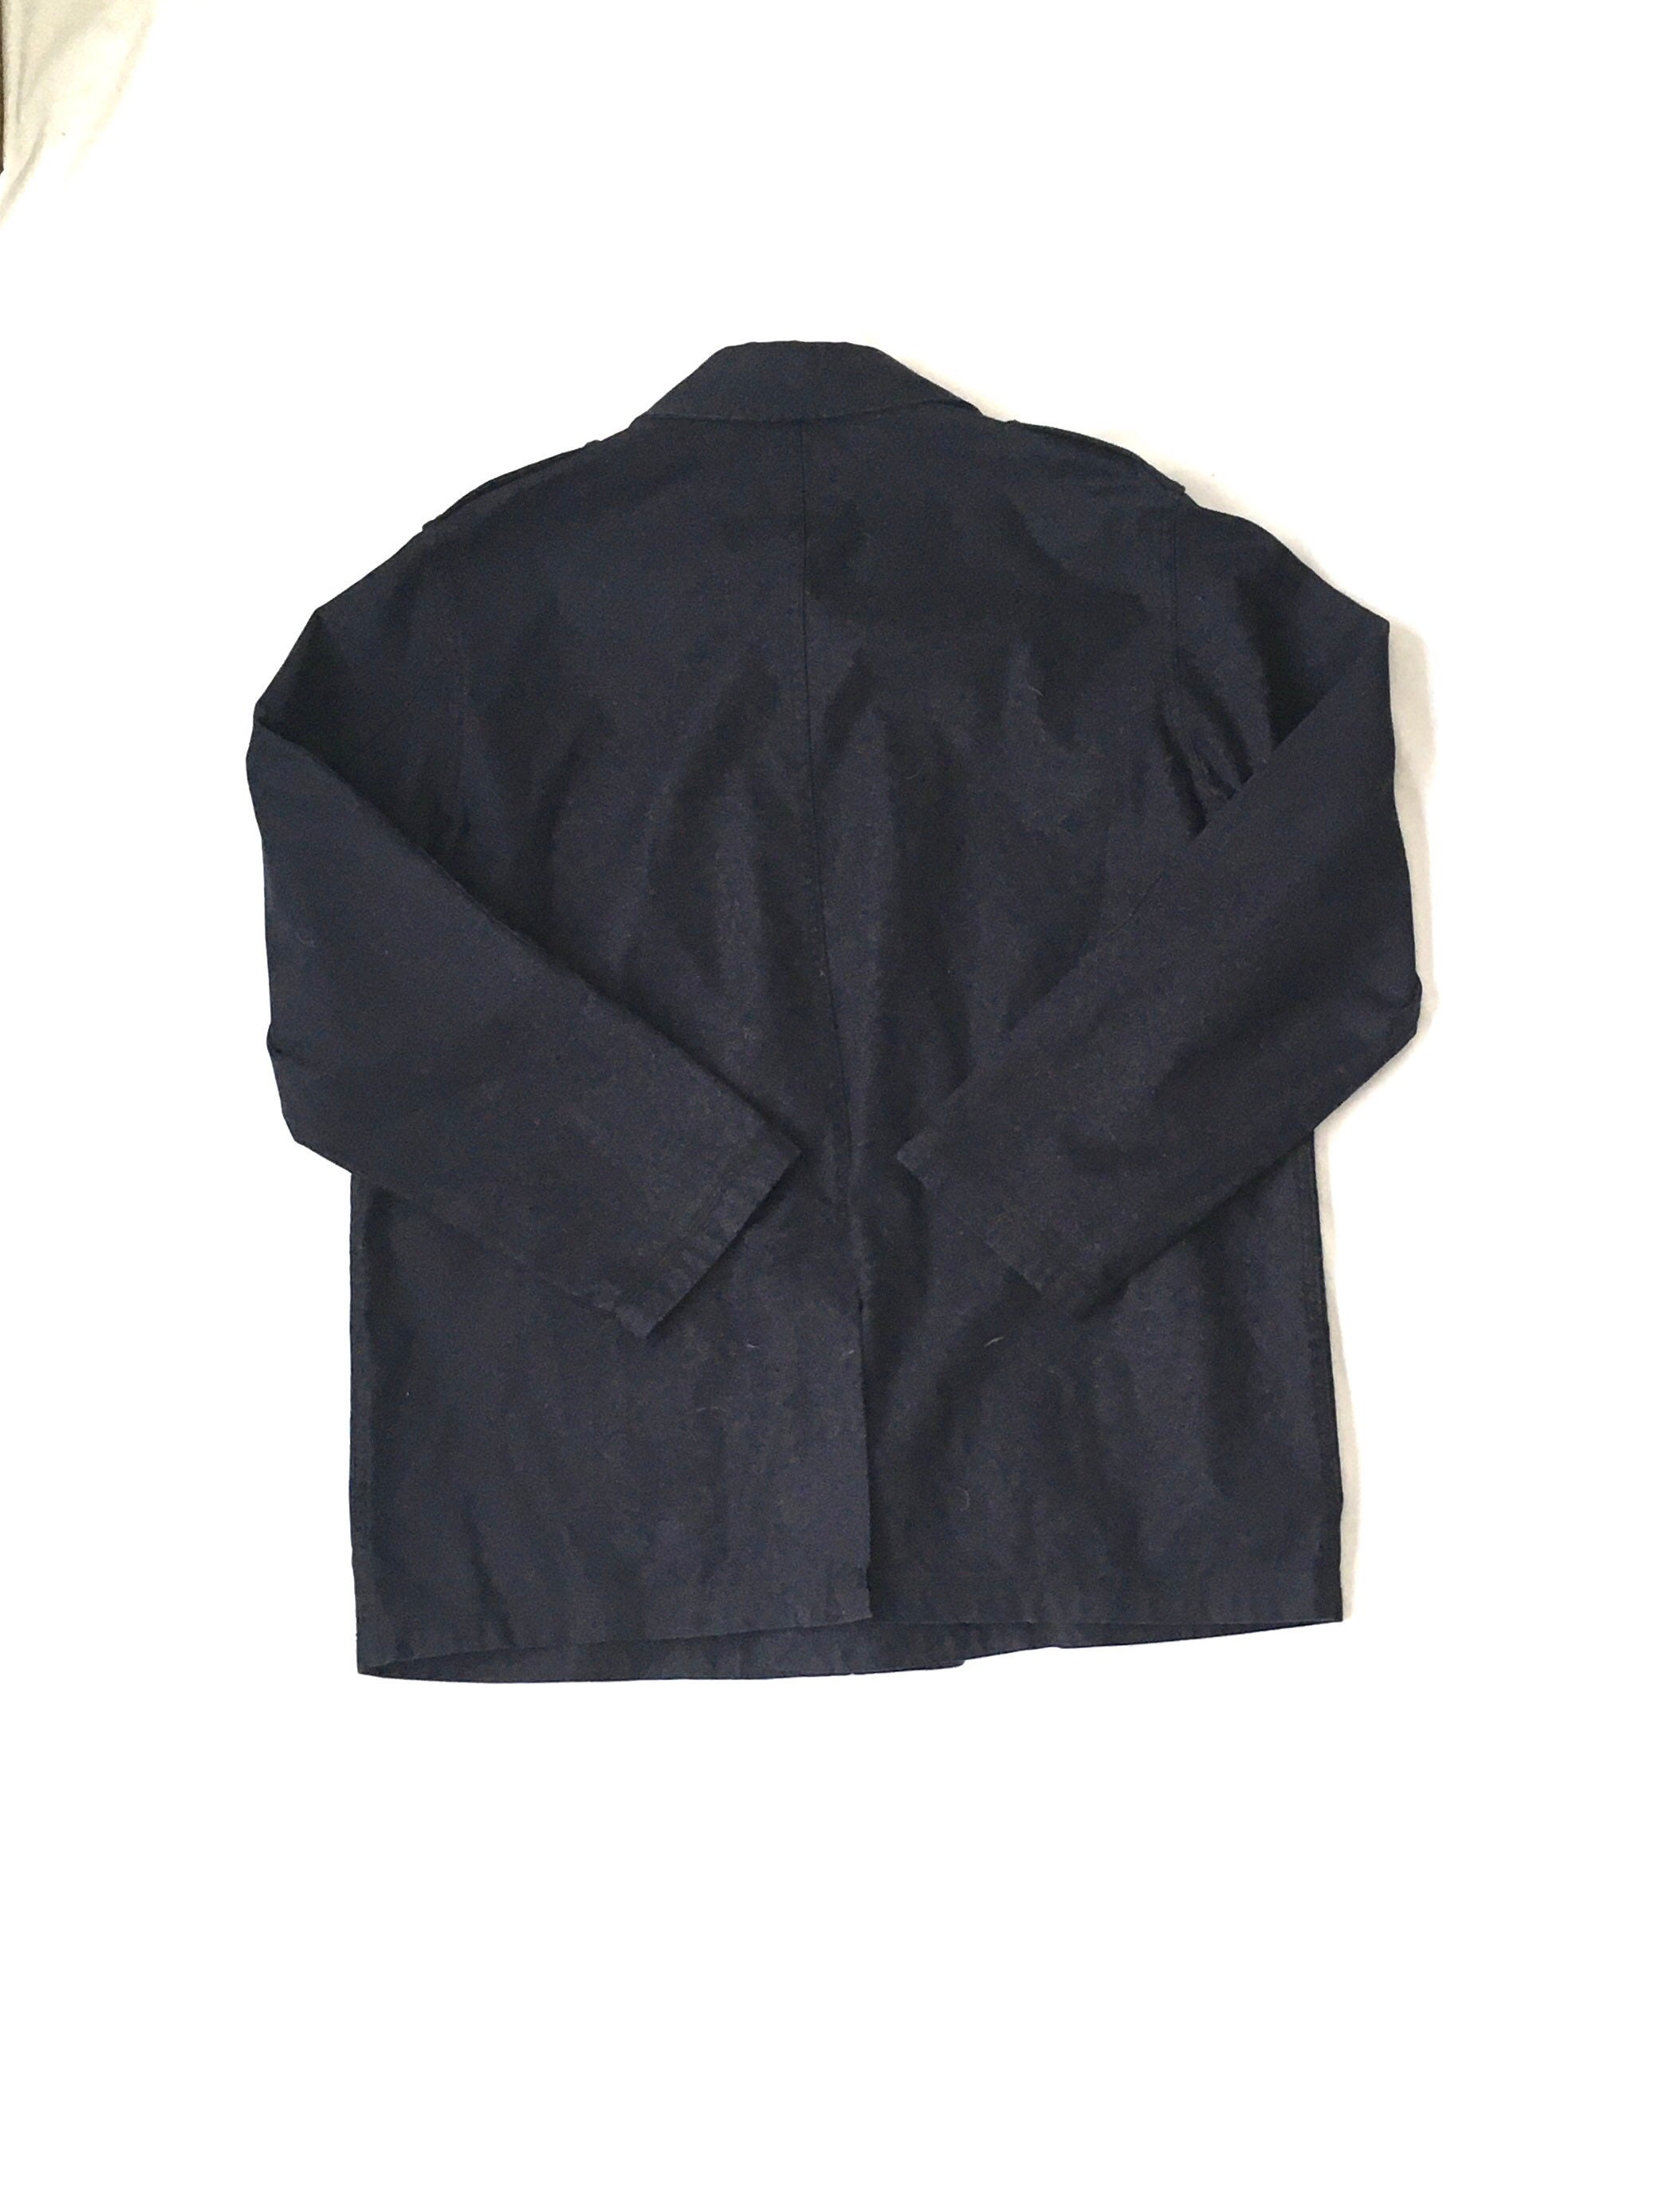 Mens vintage blue TOMMY HILFIGER pea coat navy jacket retro | Etsy